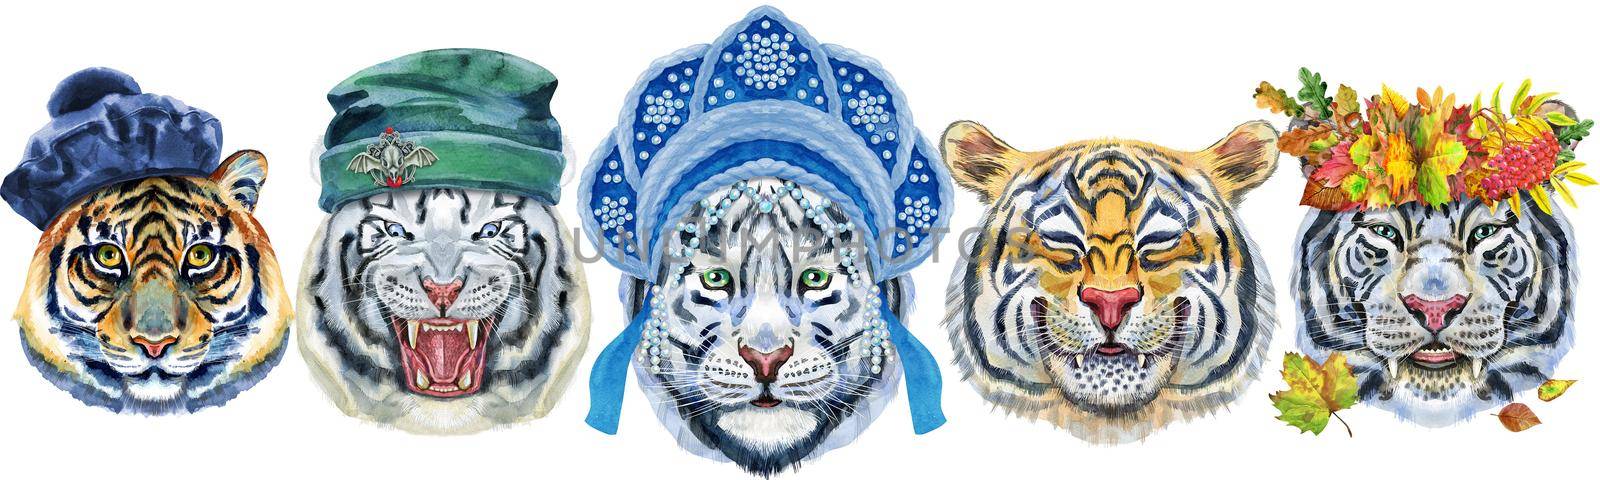 Watercolor illustration of orange smiling tiger, white tigers in hat, kokoshnik and autumn wreath